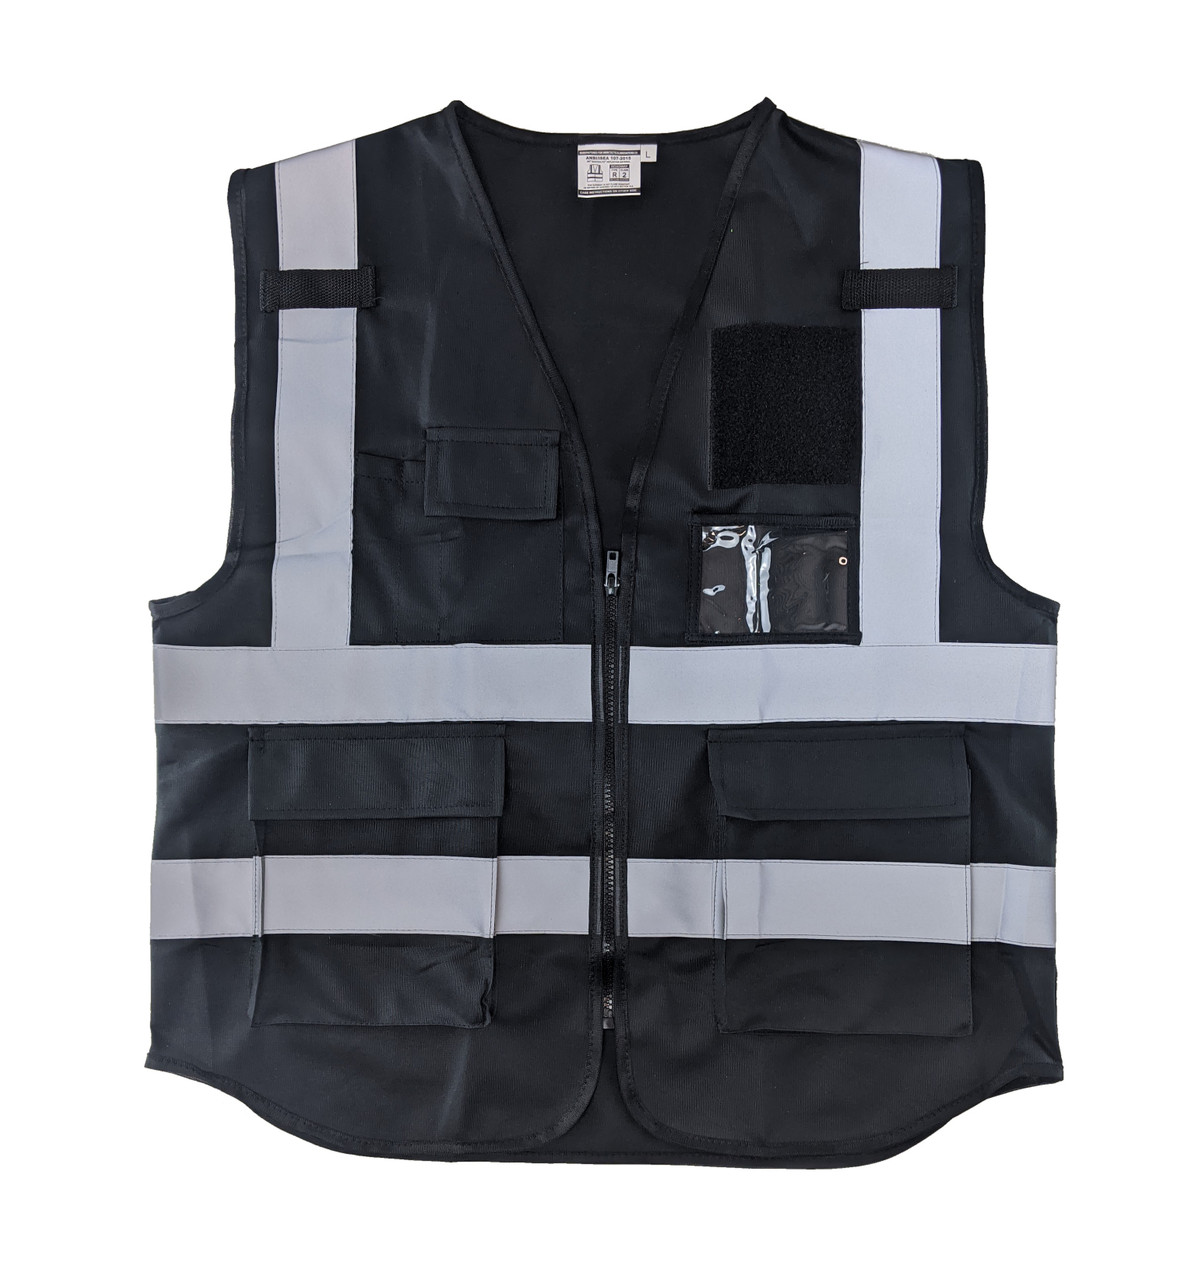 Hi-Visibility Black Vest (ANSI/ISEA 107-2015 -CLASS 2) with Velcro ...